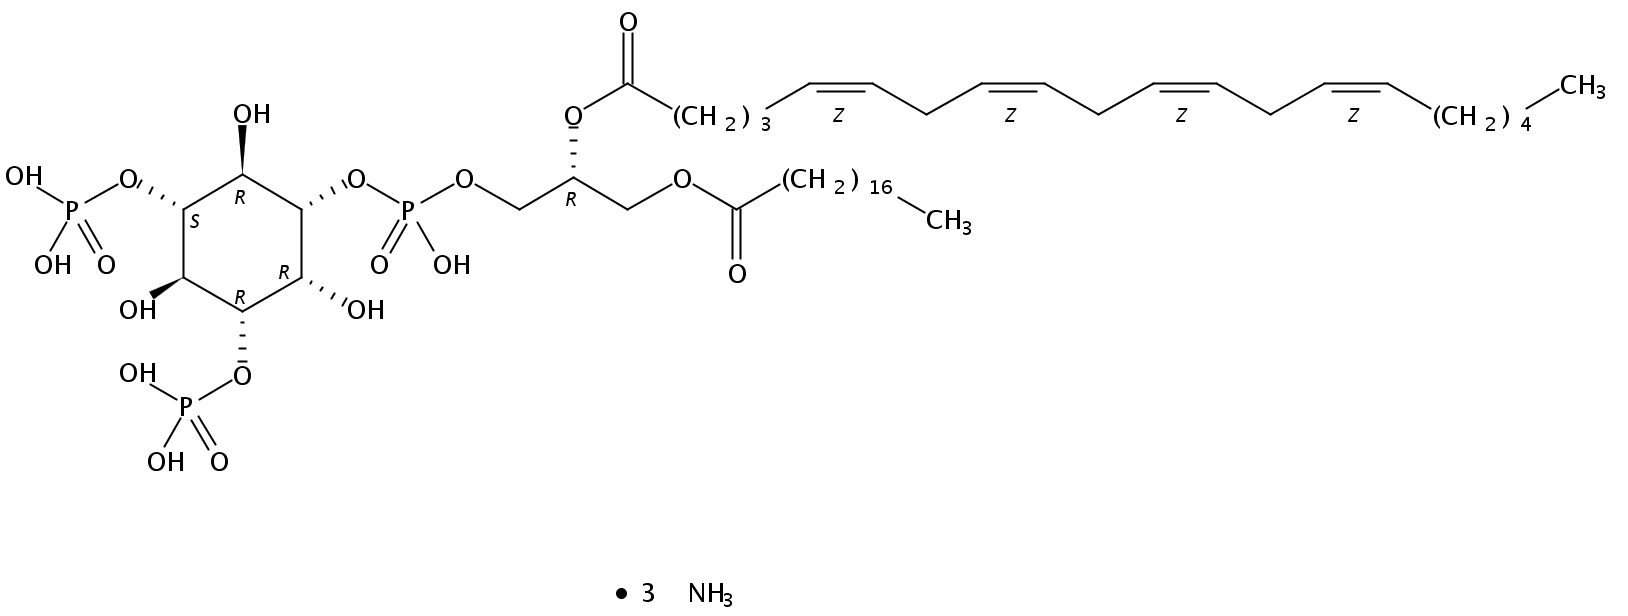 1-stearoyl-2-arachidonoyl-sn-glycero-3-phospho-(1'-myo-inositol-3',5'-bisphosphate) (ammonium salt)